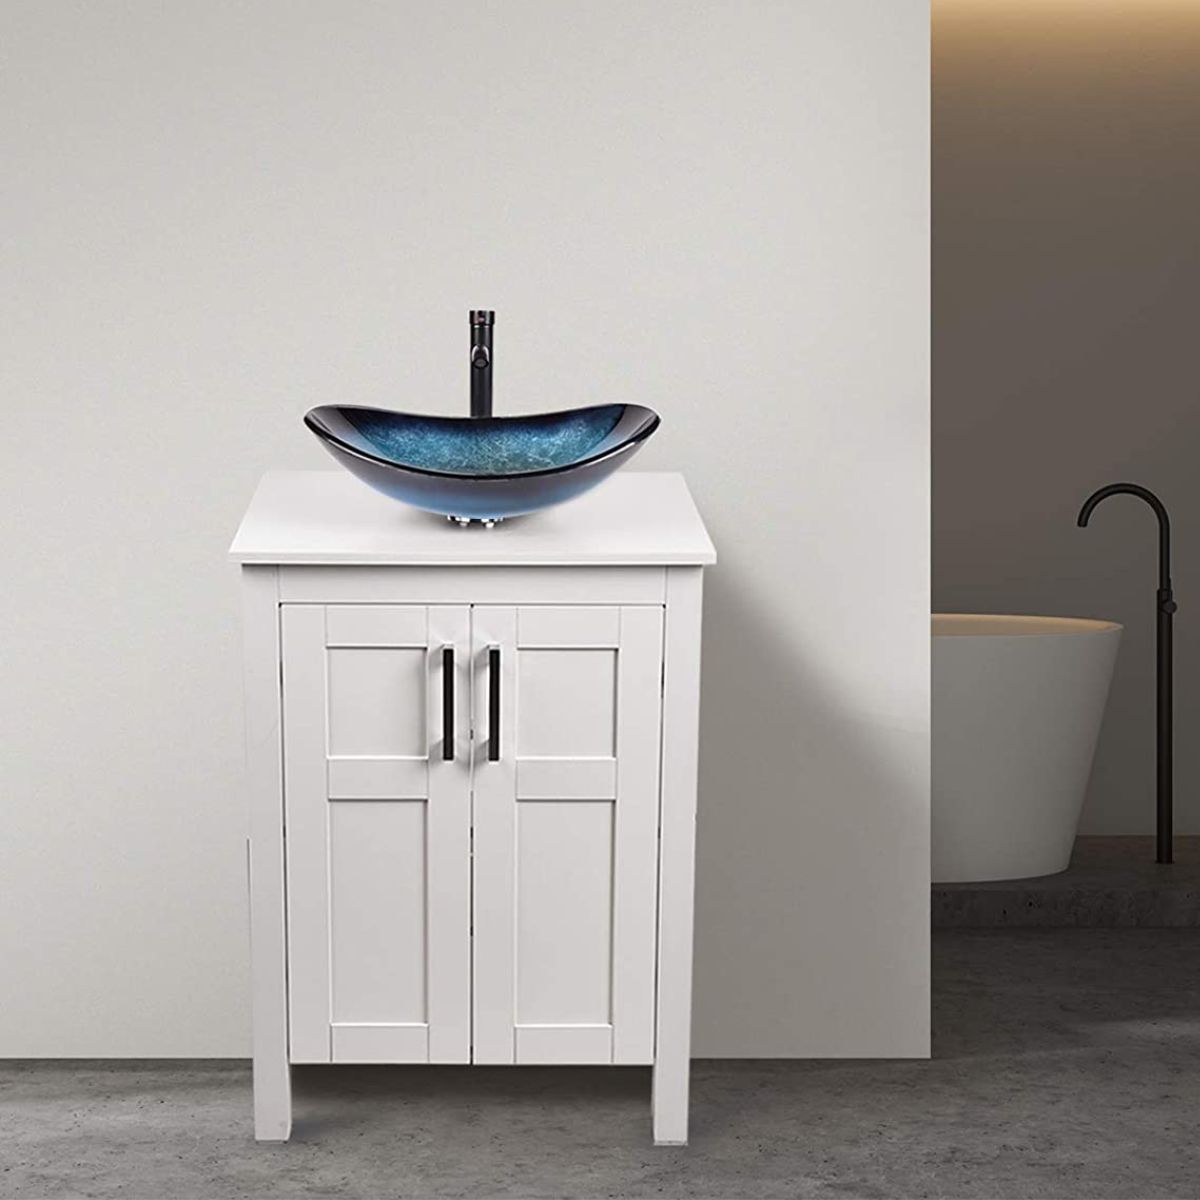 Elecwish White Bathroom Vanity and Blue Boat Sink Set HW1120-WH display scene